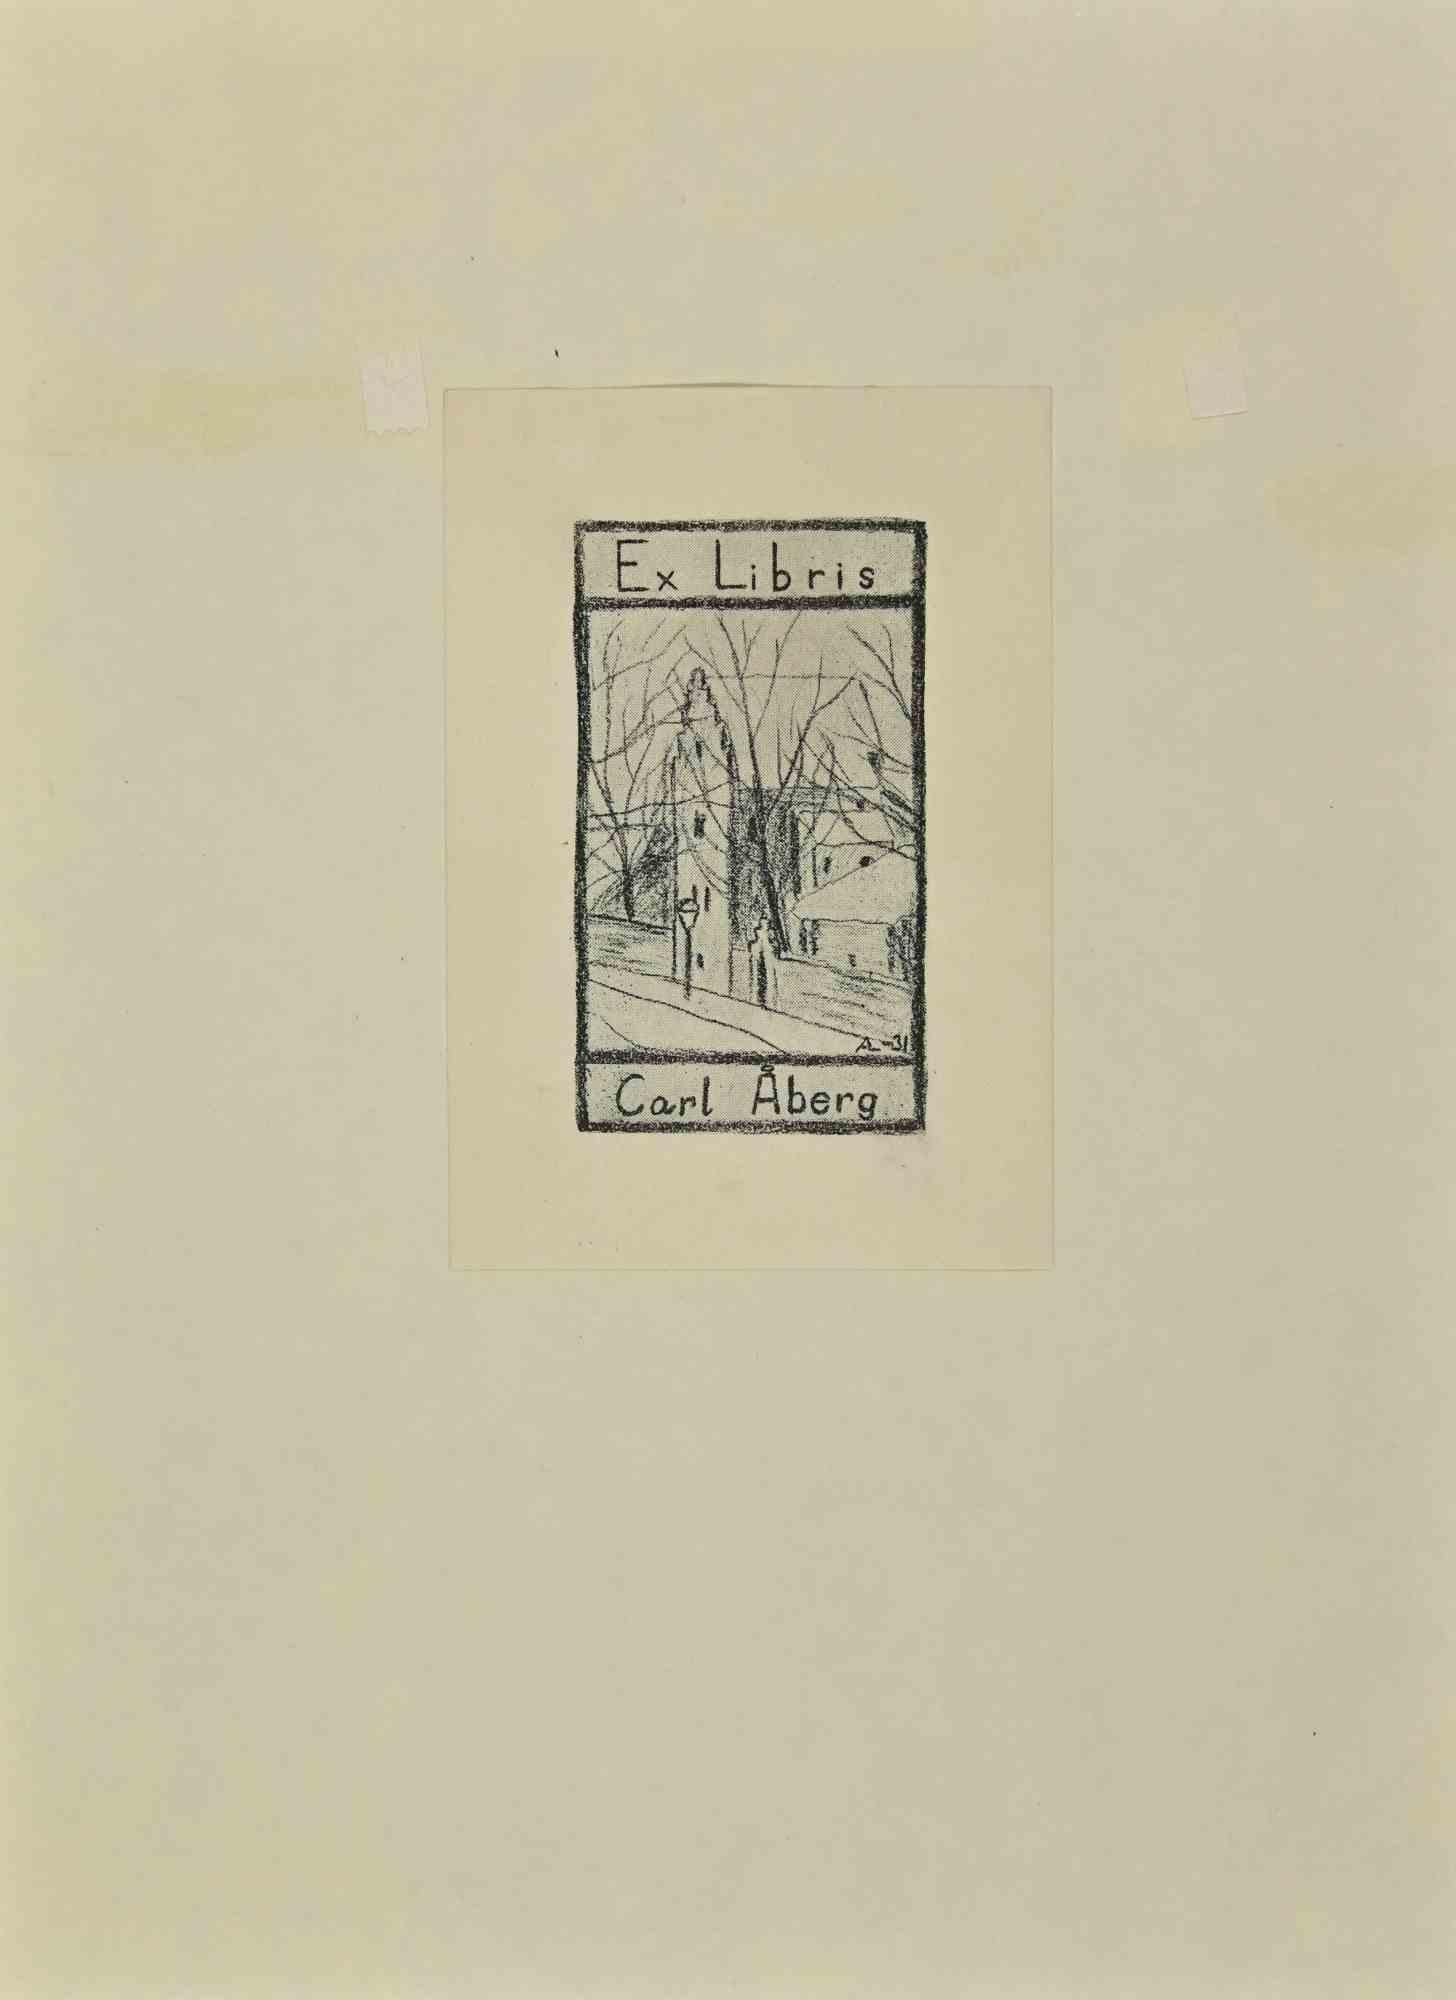  Ex Libris   Carl Aberg - Woodcut - Mid 20th Century